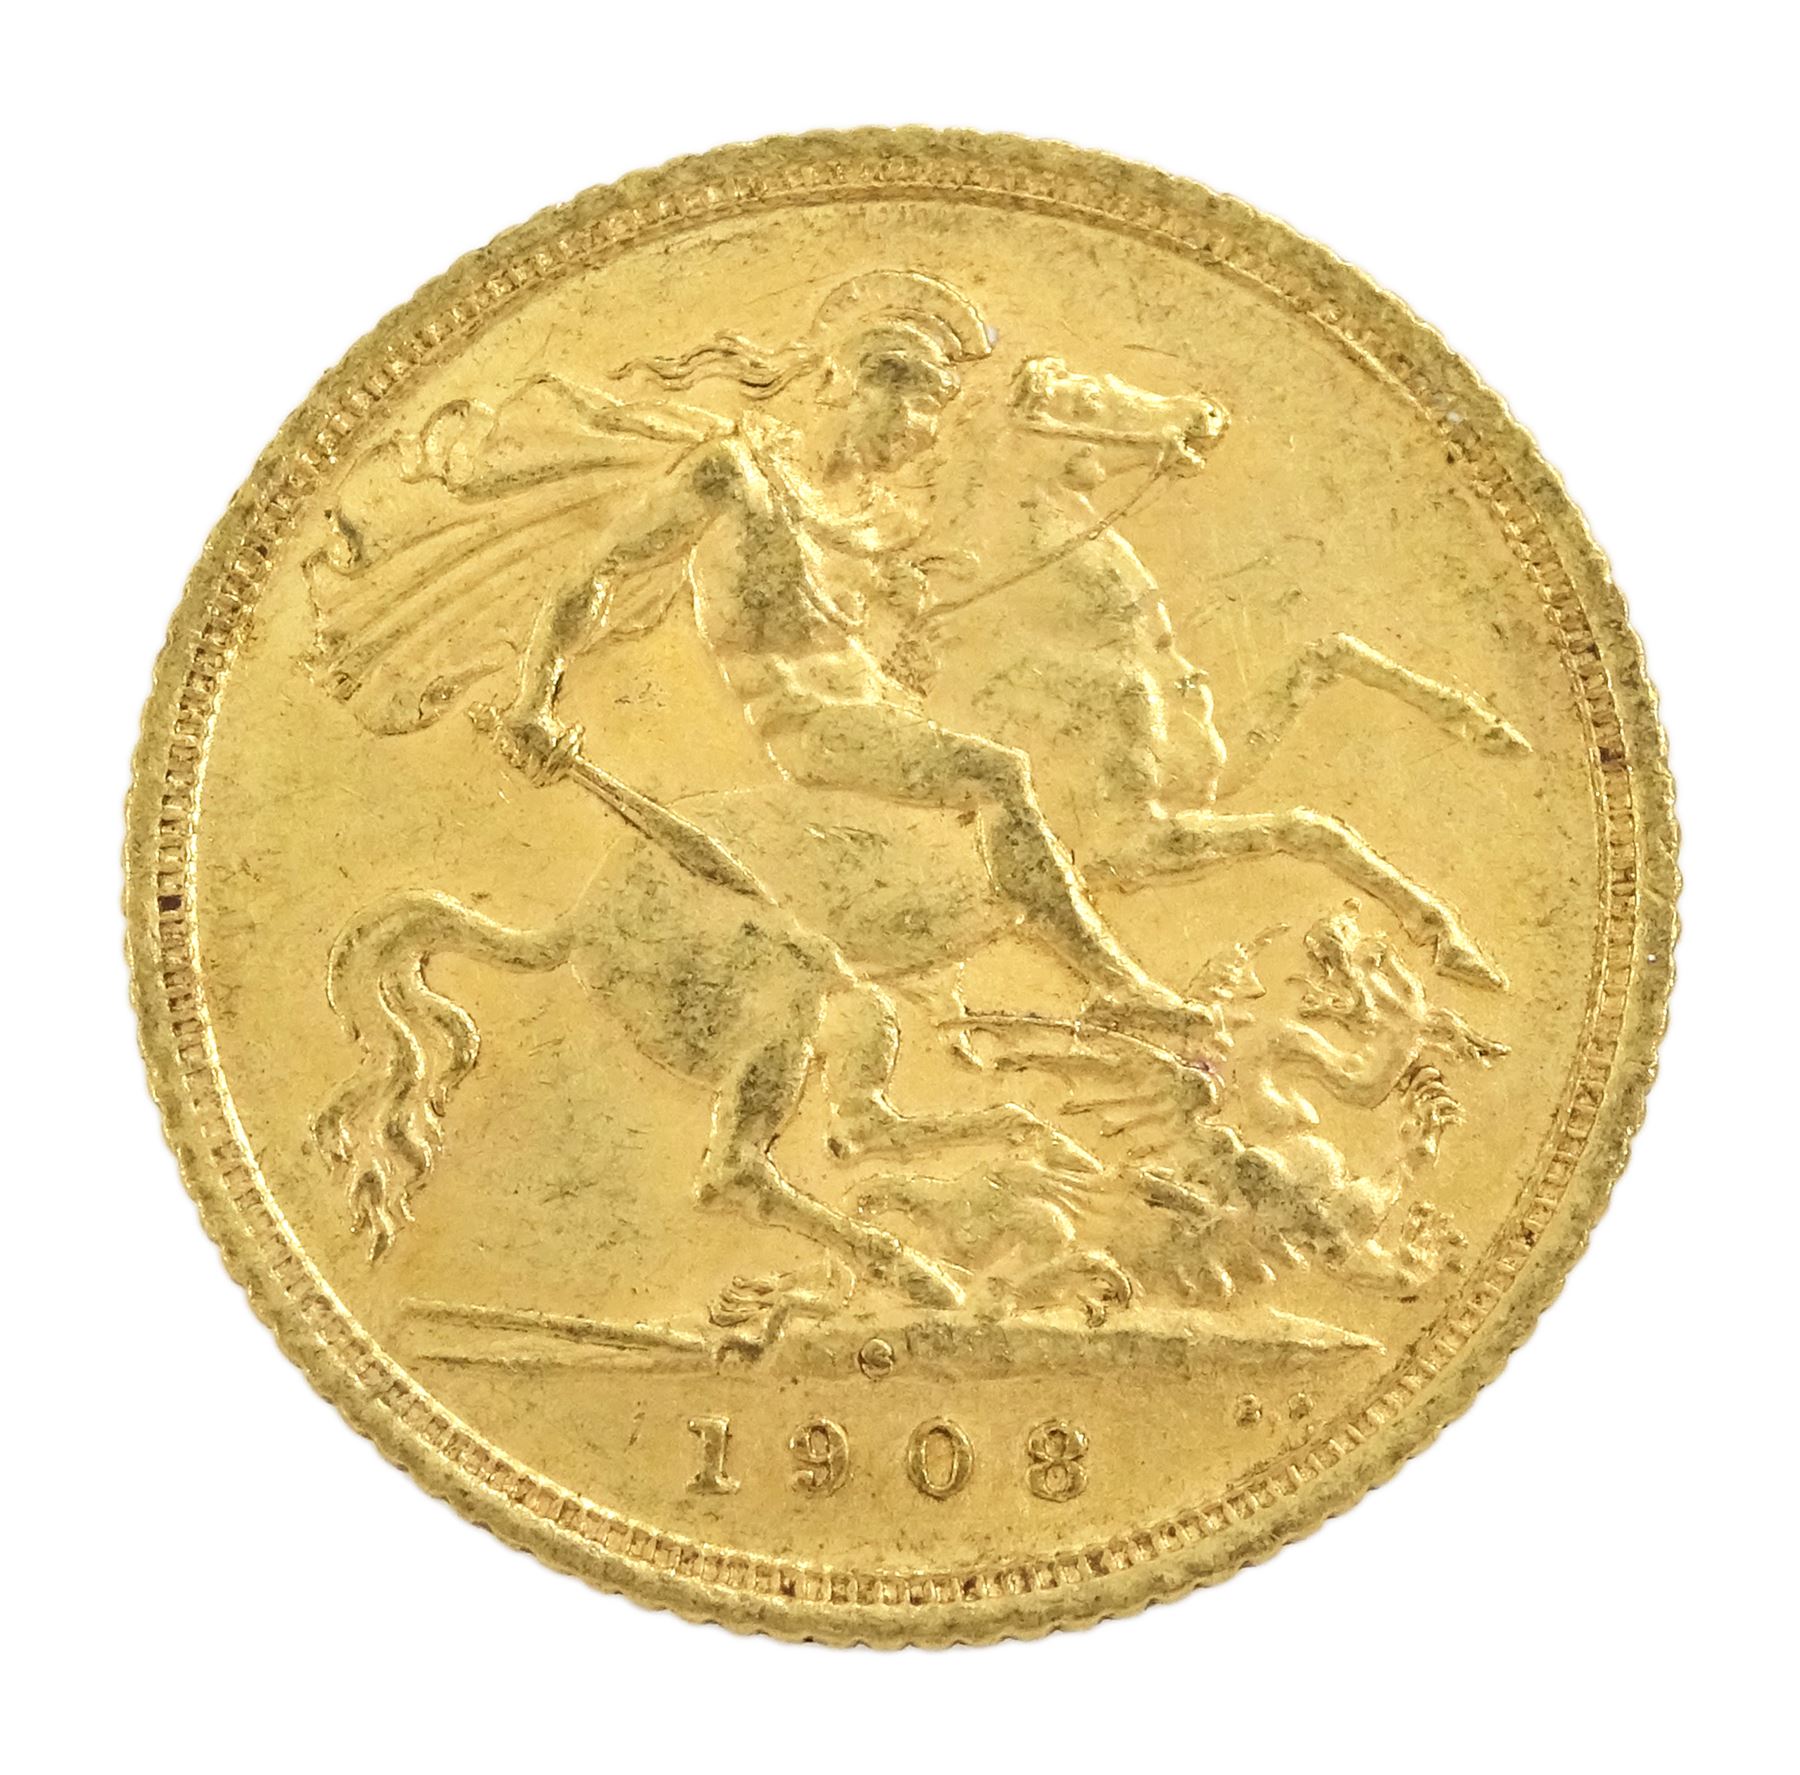 King Edward VII 1908 gold half sovereign coin - Image 2 of 2